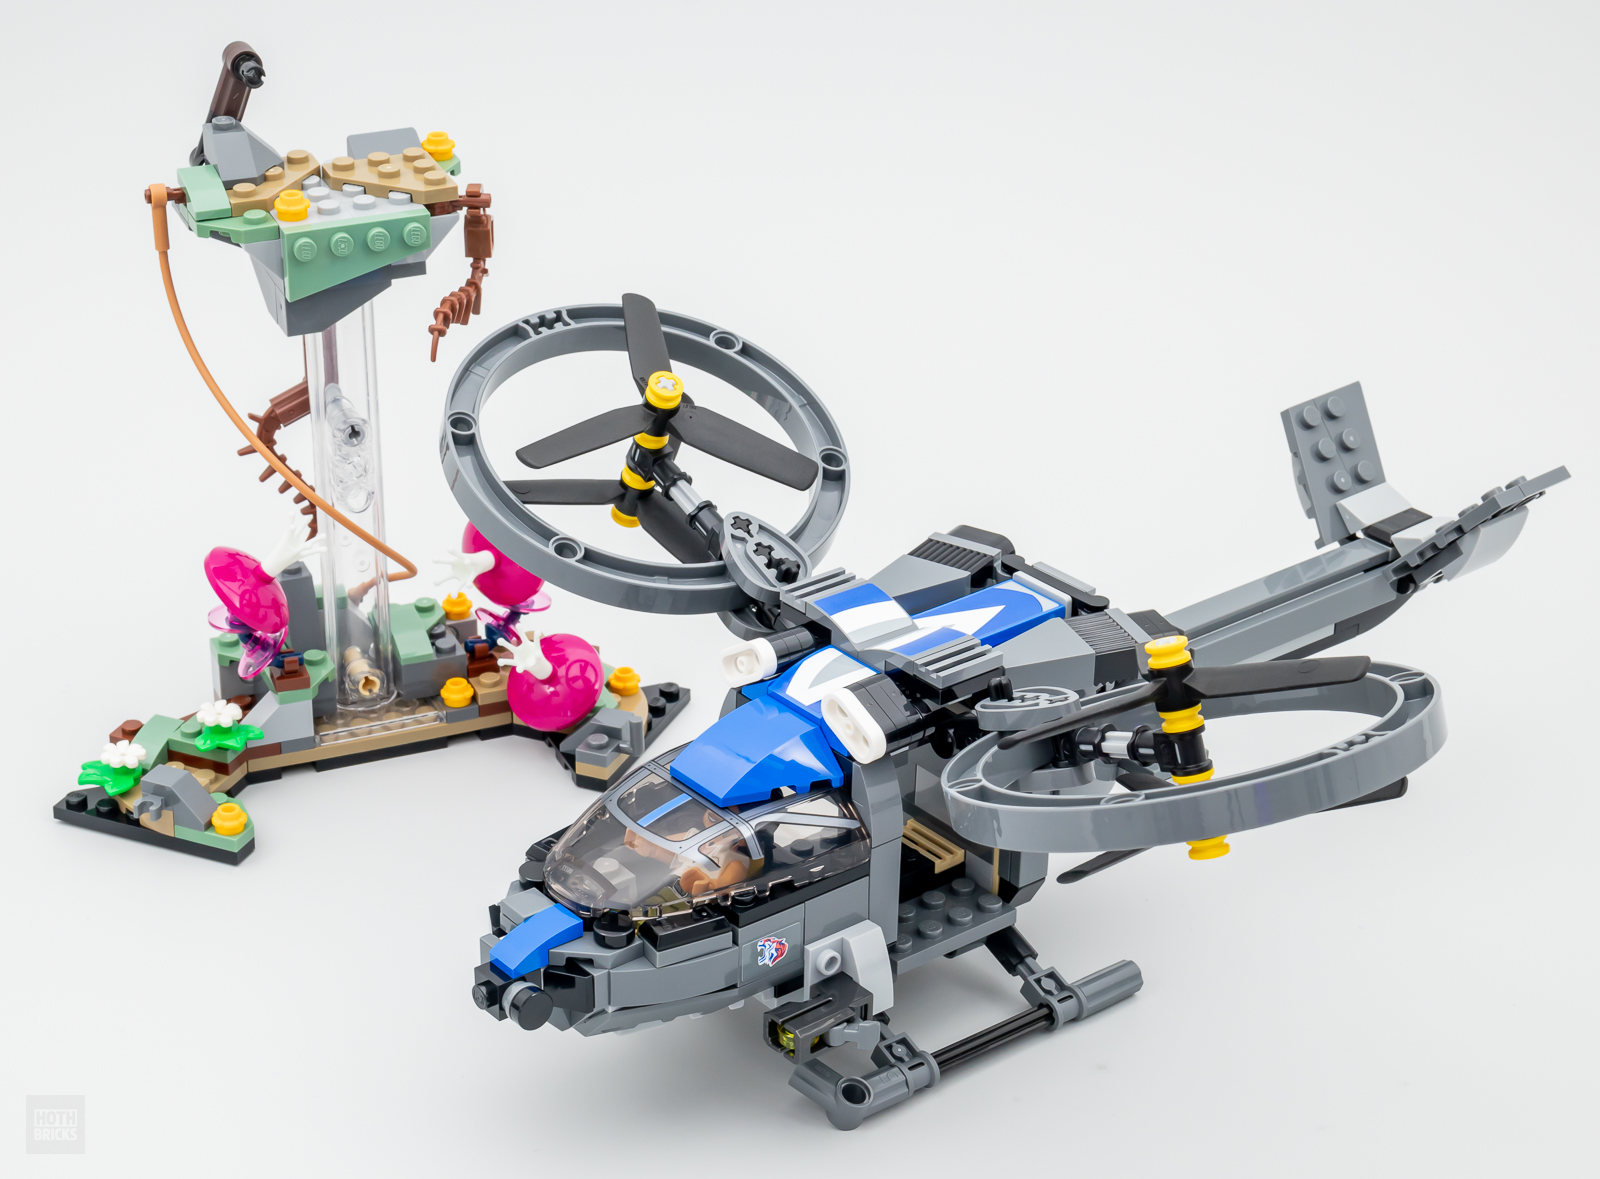 LEGO® Avatar Montañas Flotantes: Sitio 26 y RDA Samson - LEGO